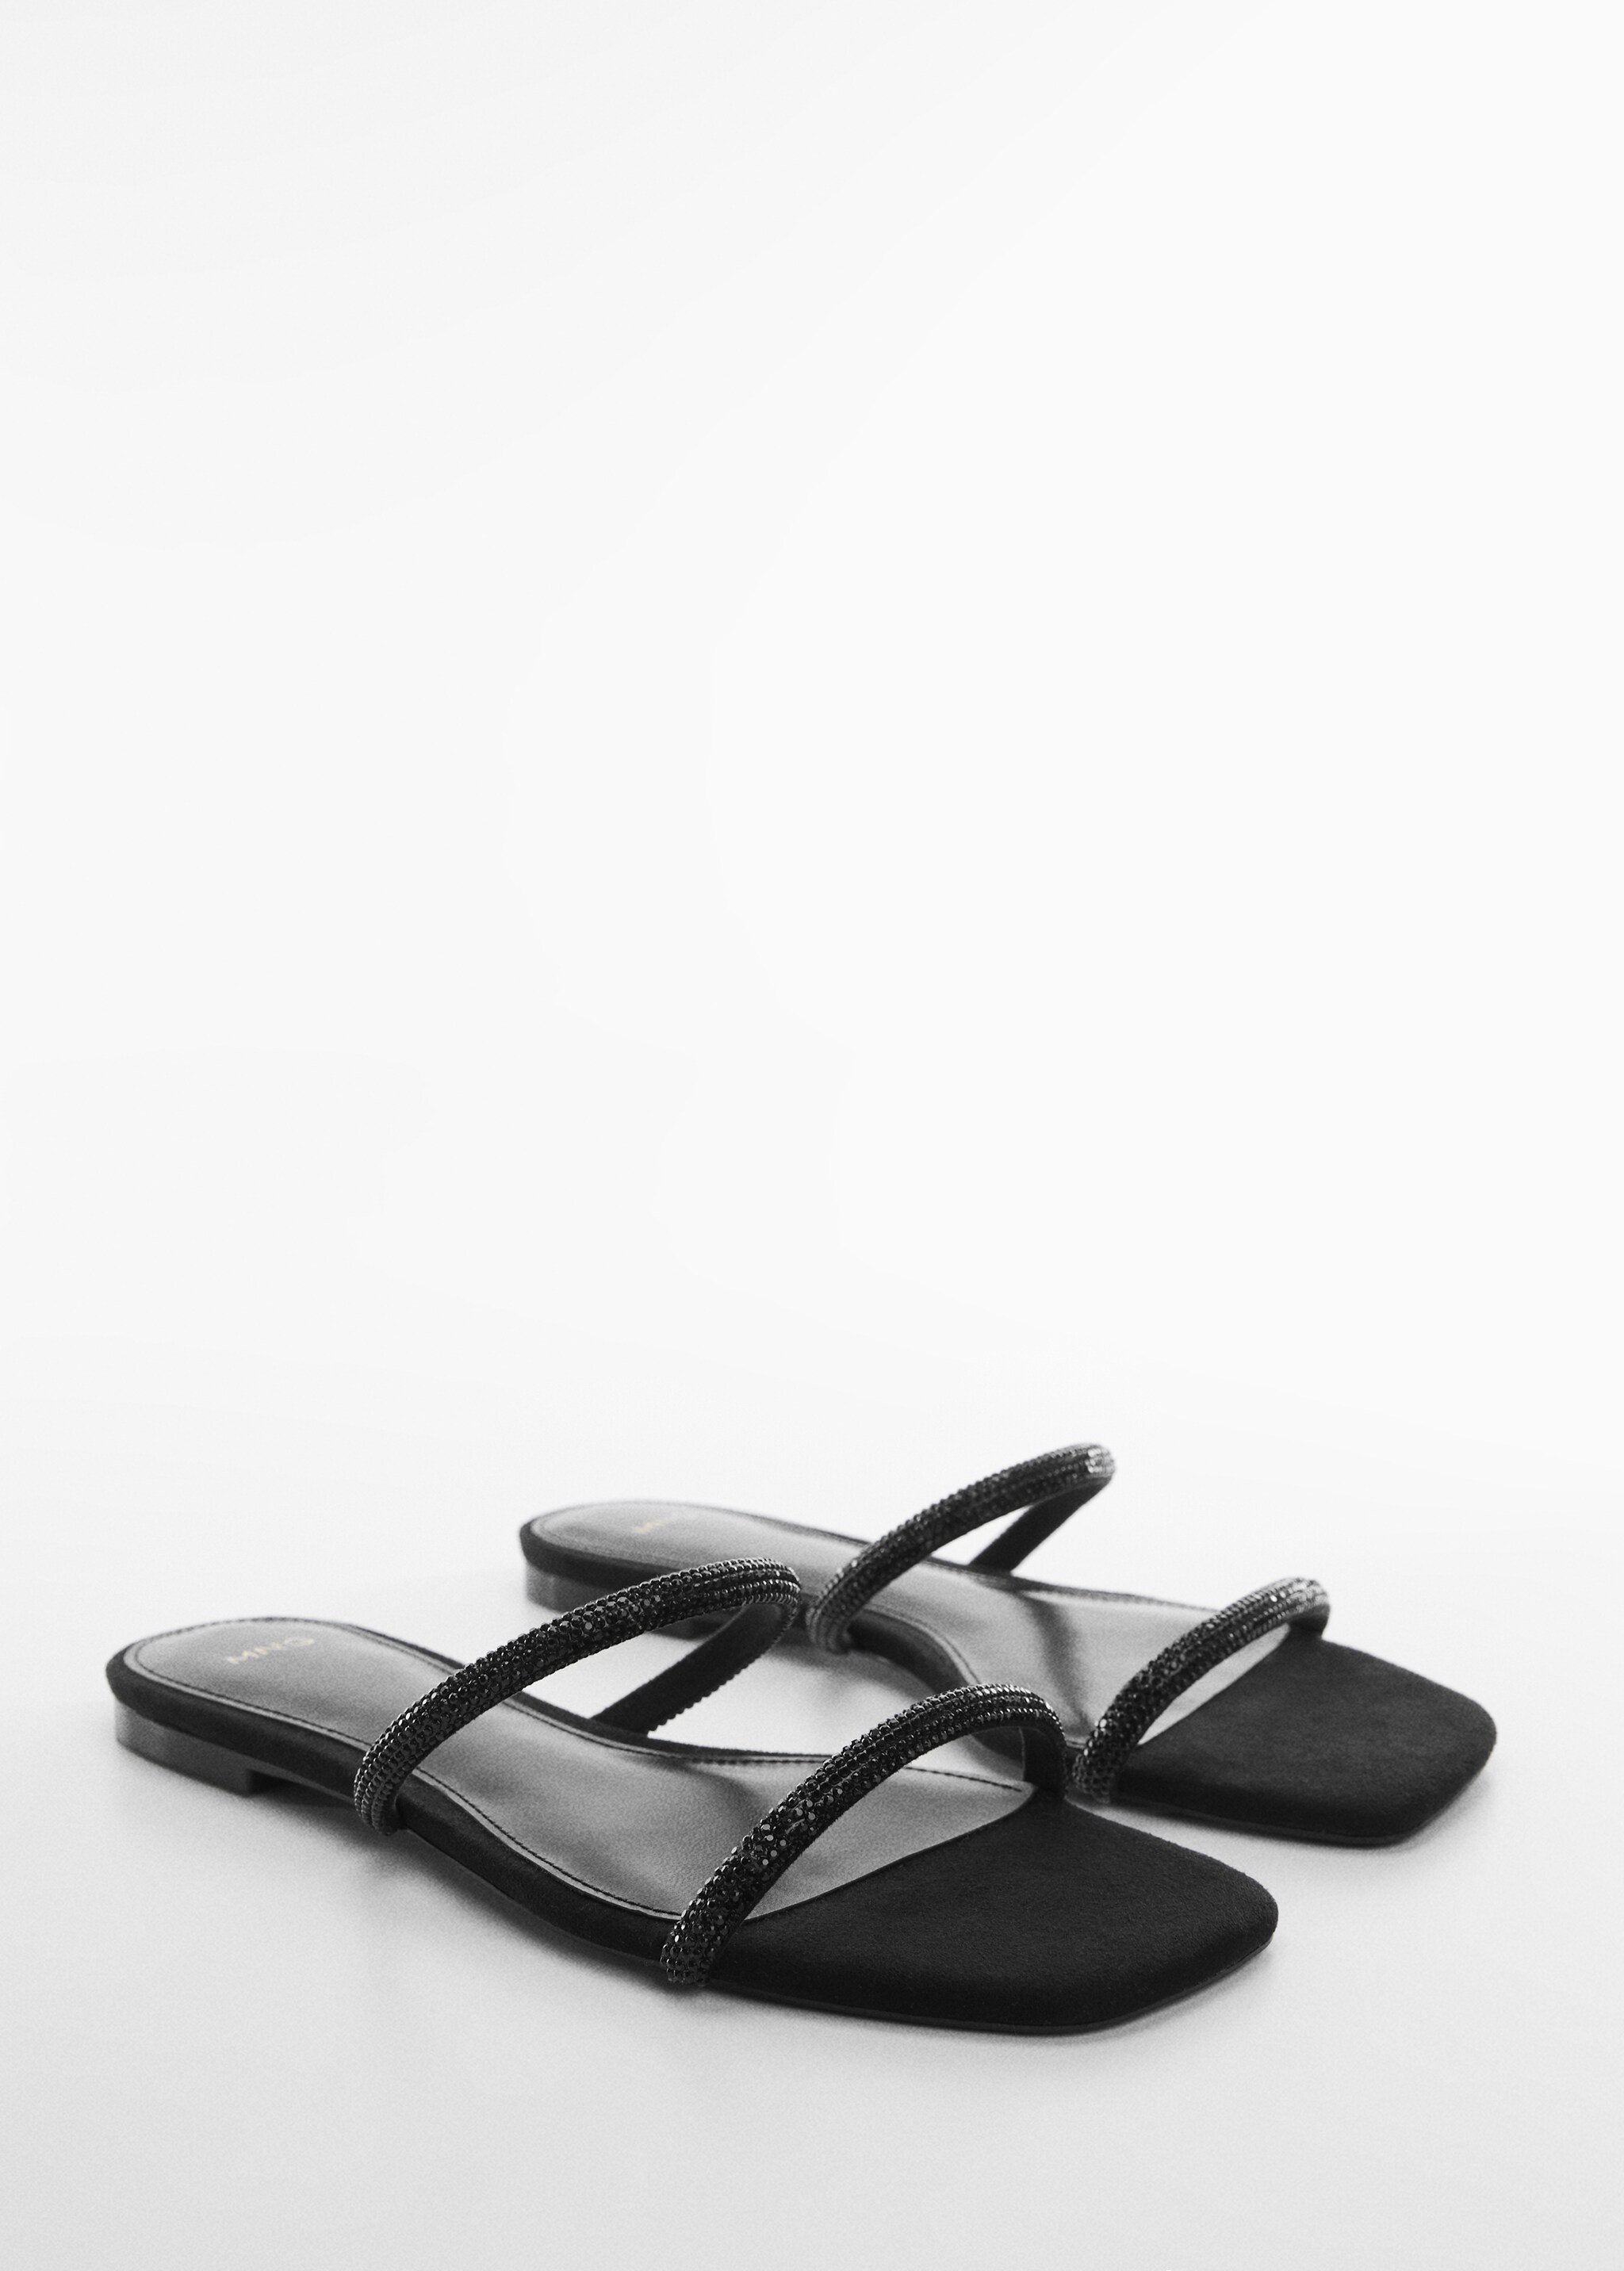 Strap rhinestone sandals - Medium plane